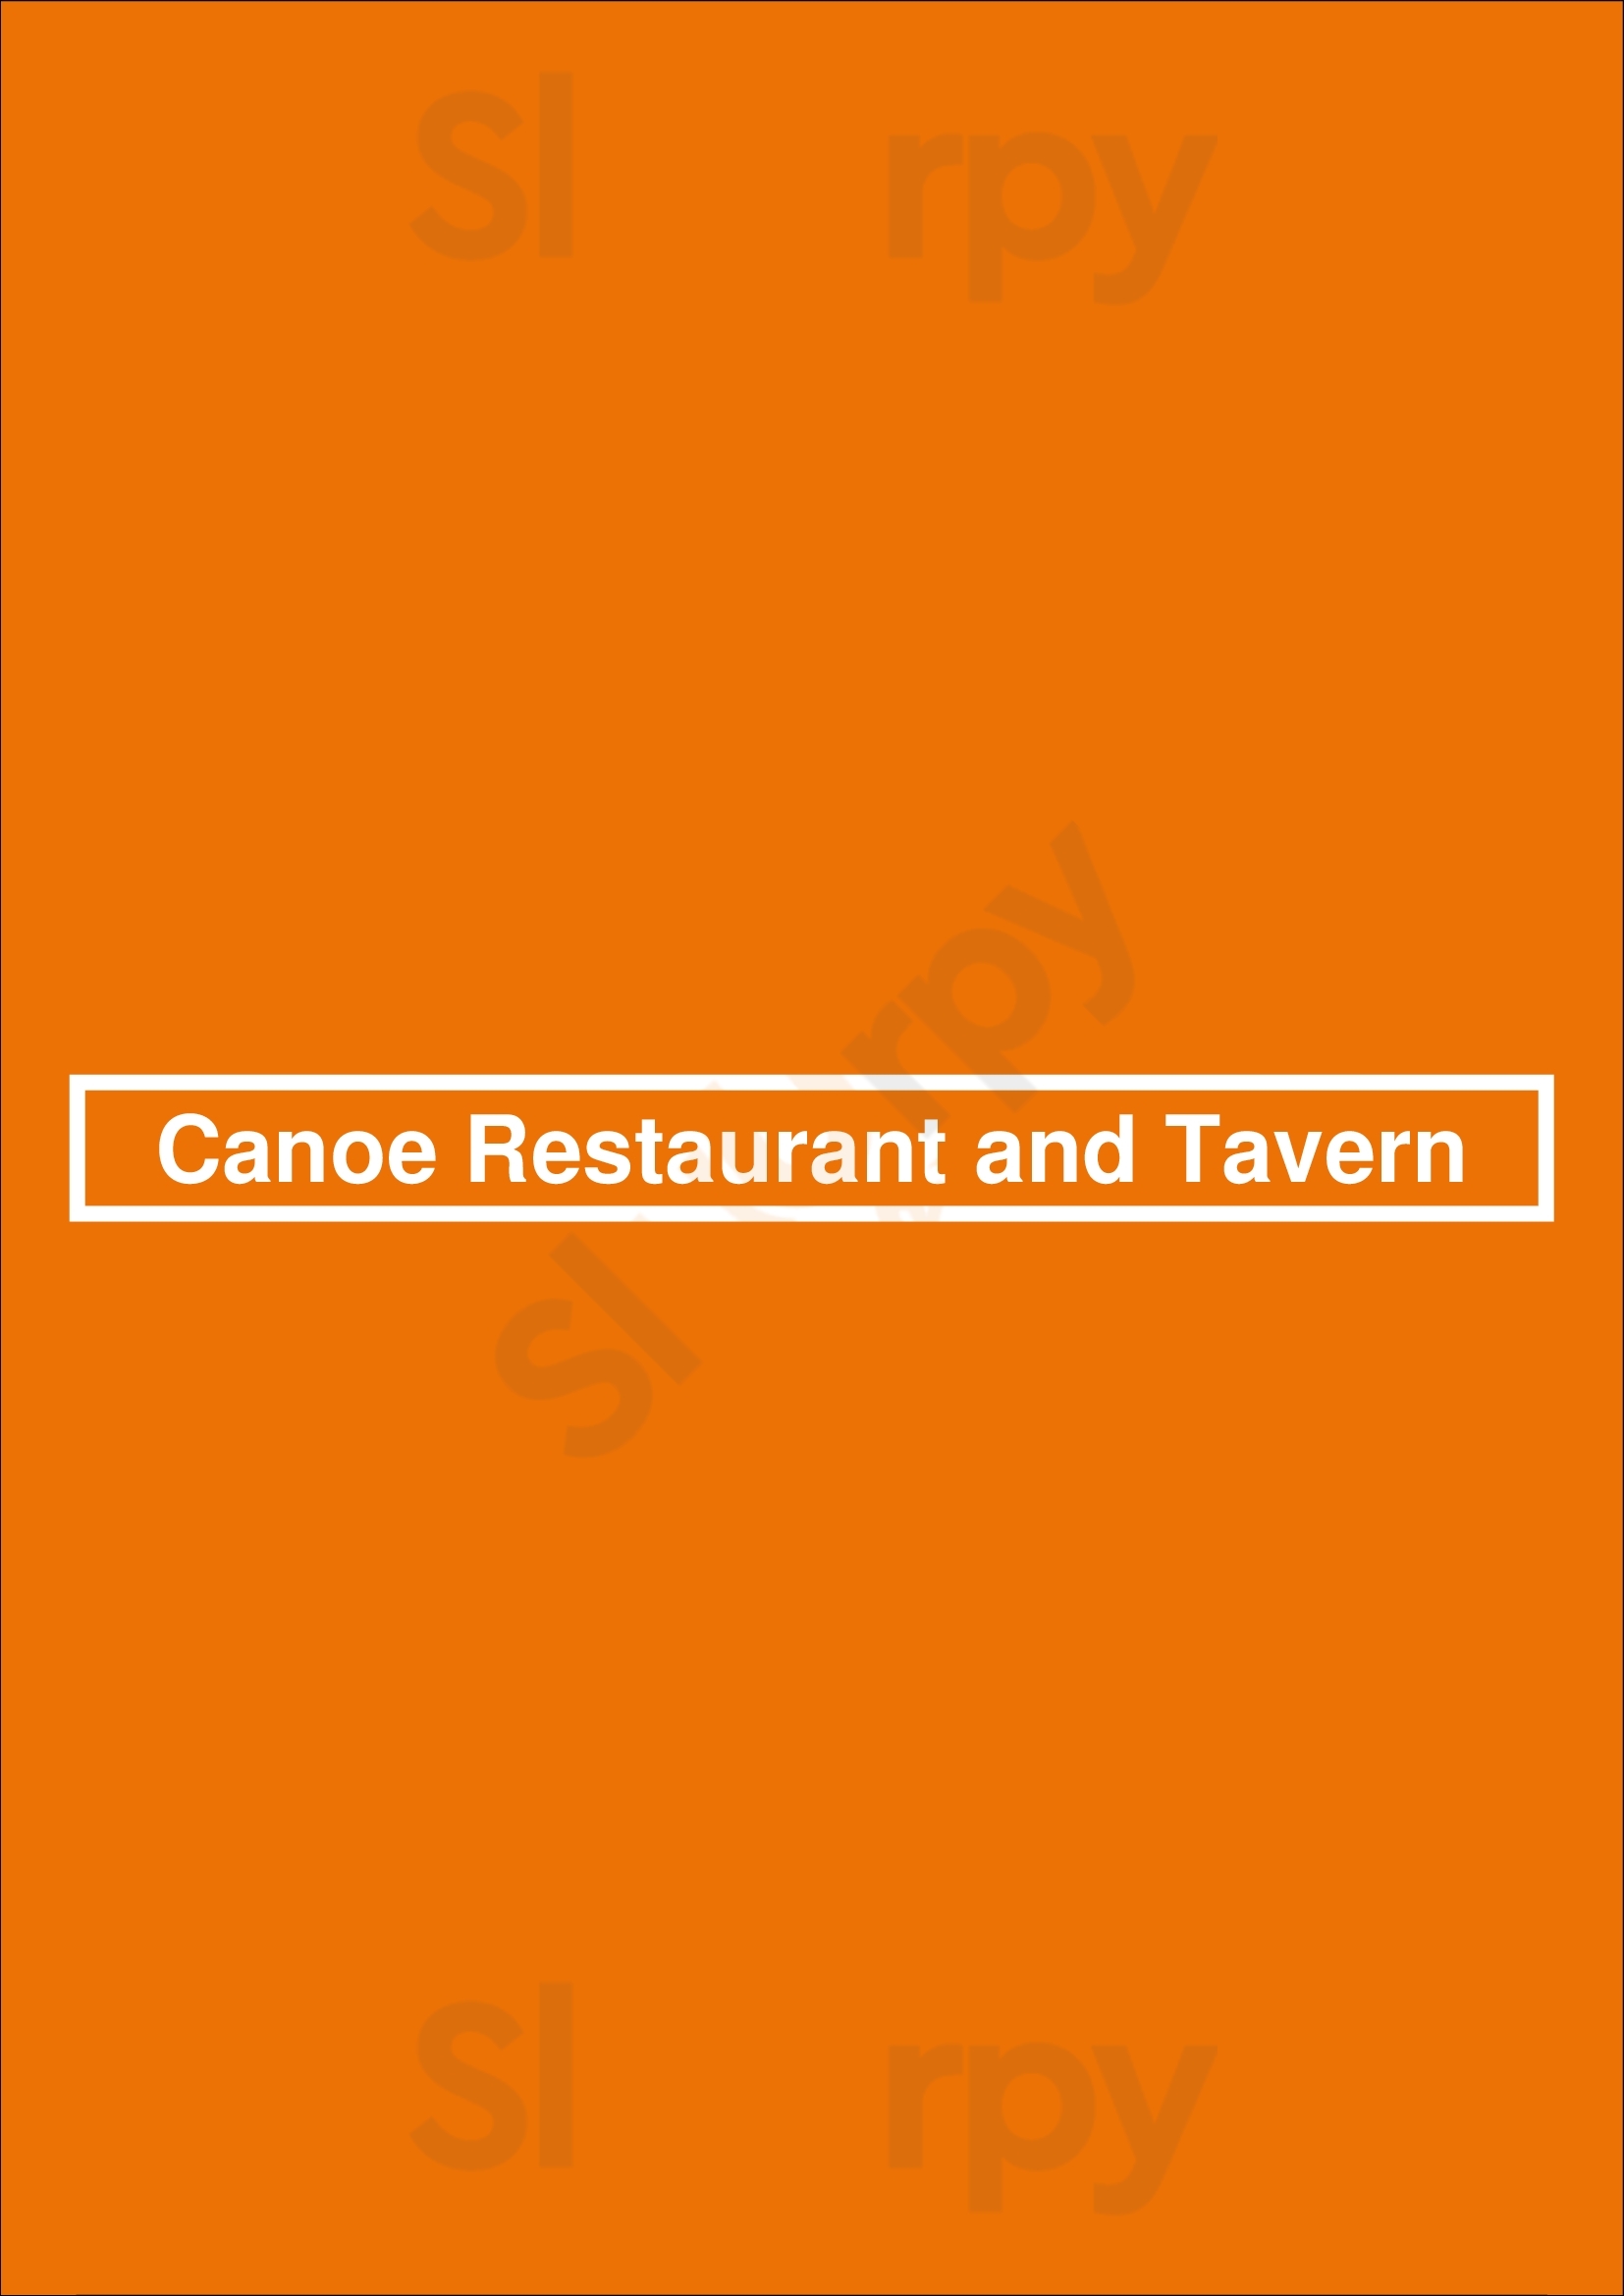 Canoe Restaurant And Tavern Bedford Menu - 1